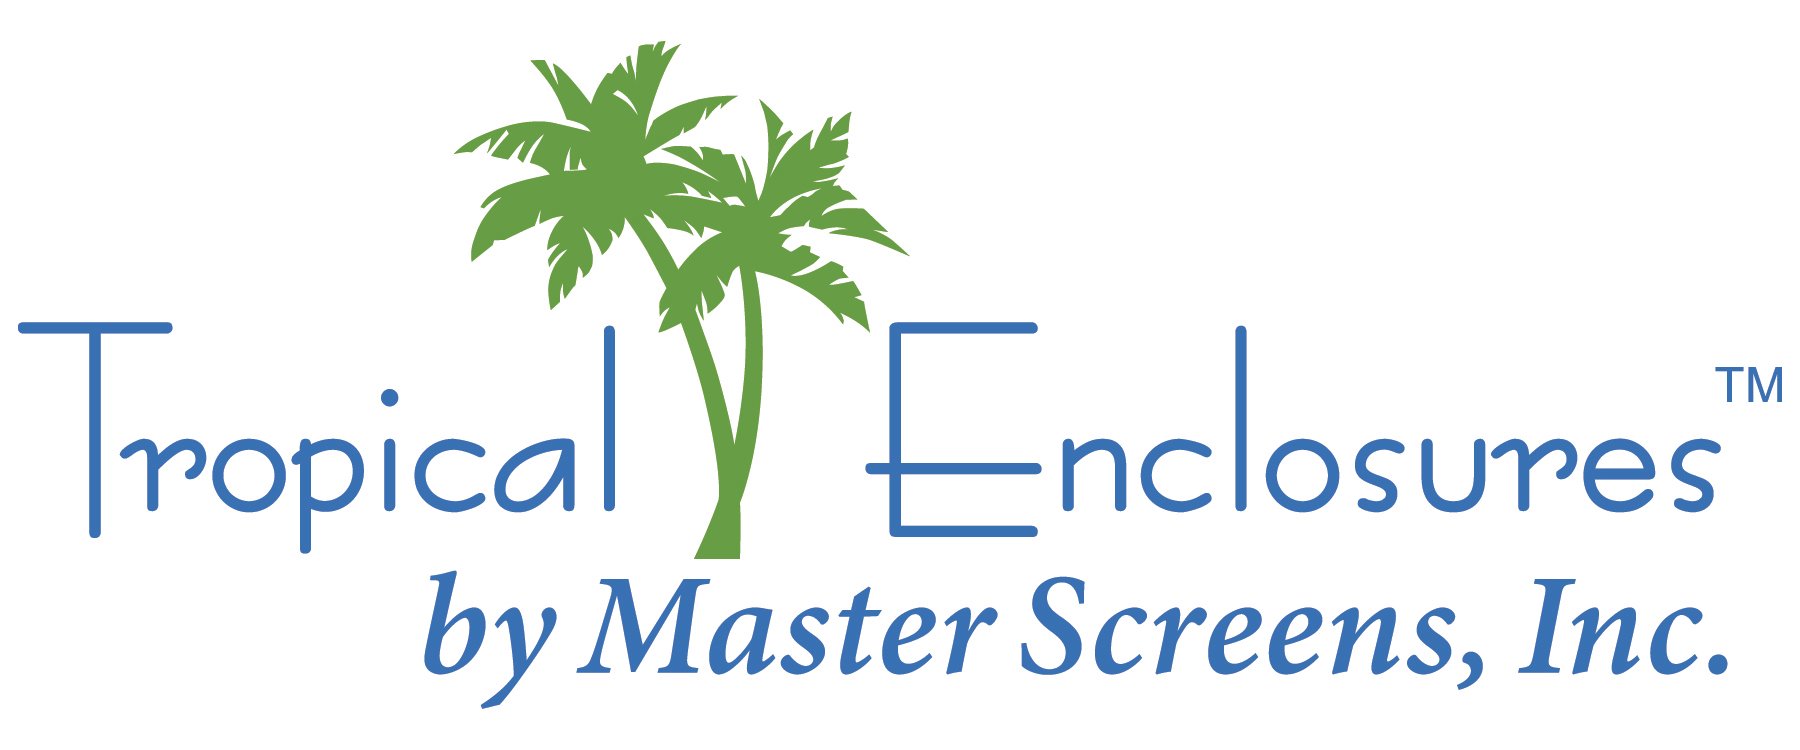 Tropical Enclosures by Master Screens, Inc. Logo